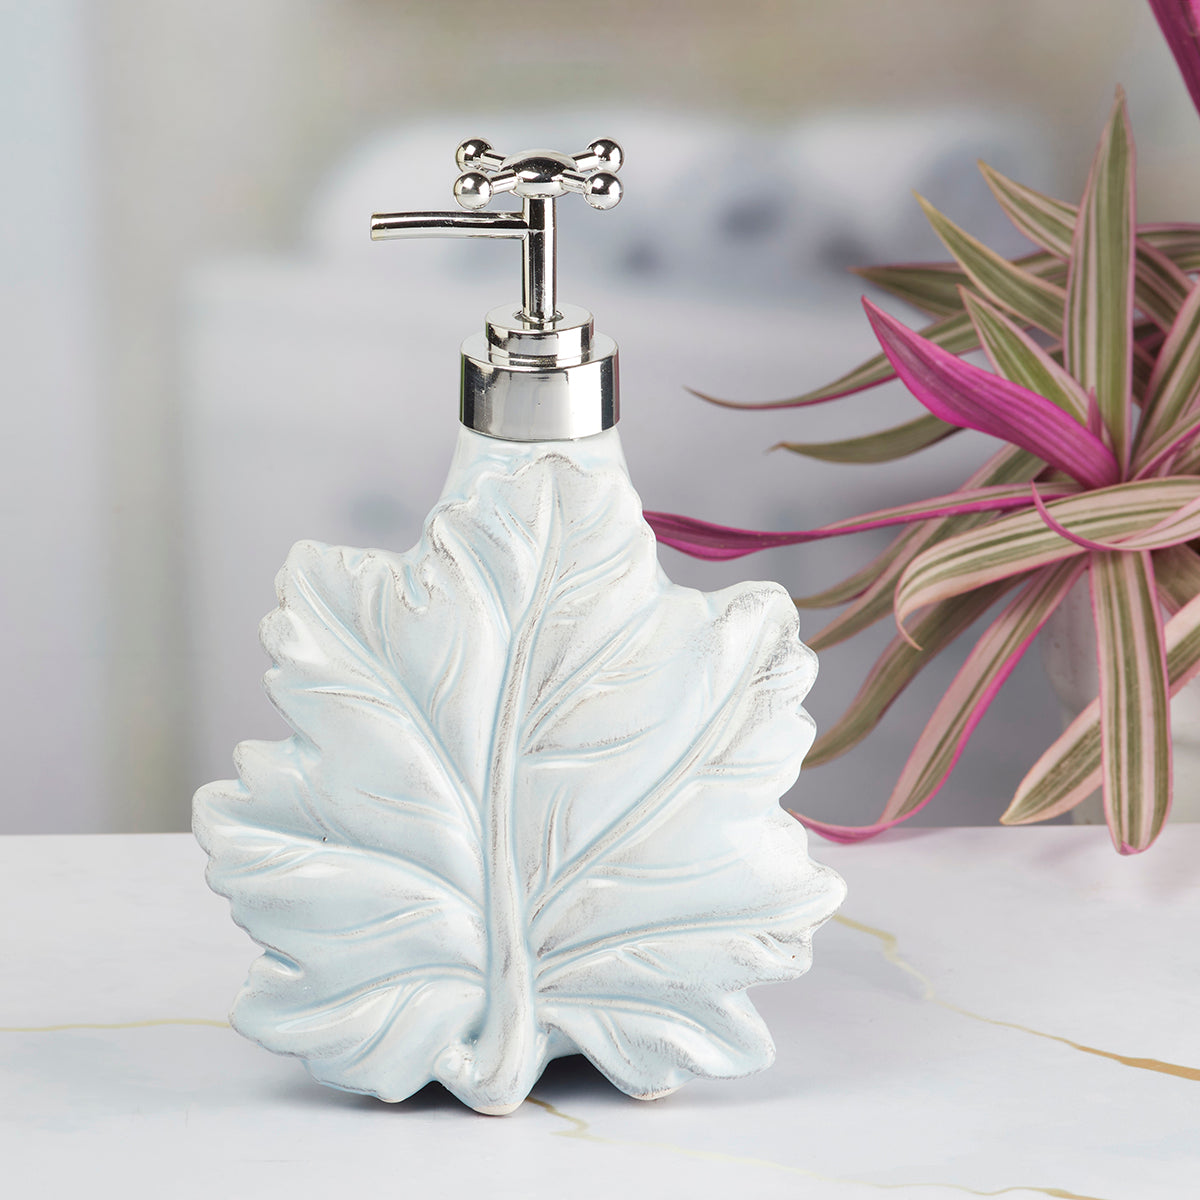 Ceramic Soap Dispenser handwash Pump for Bathroom, Set of 1, Beige (8638)